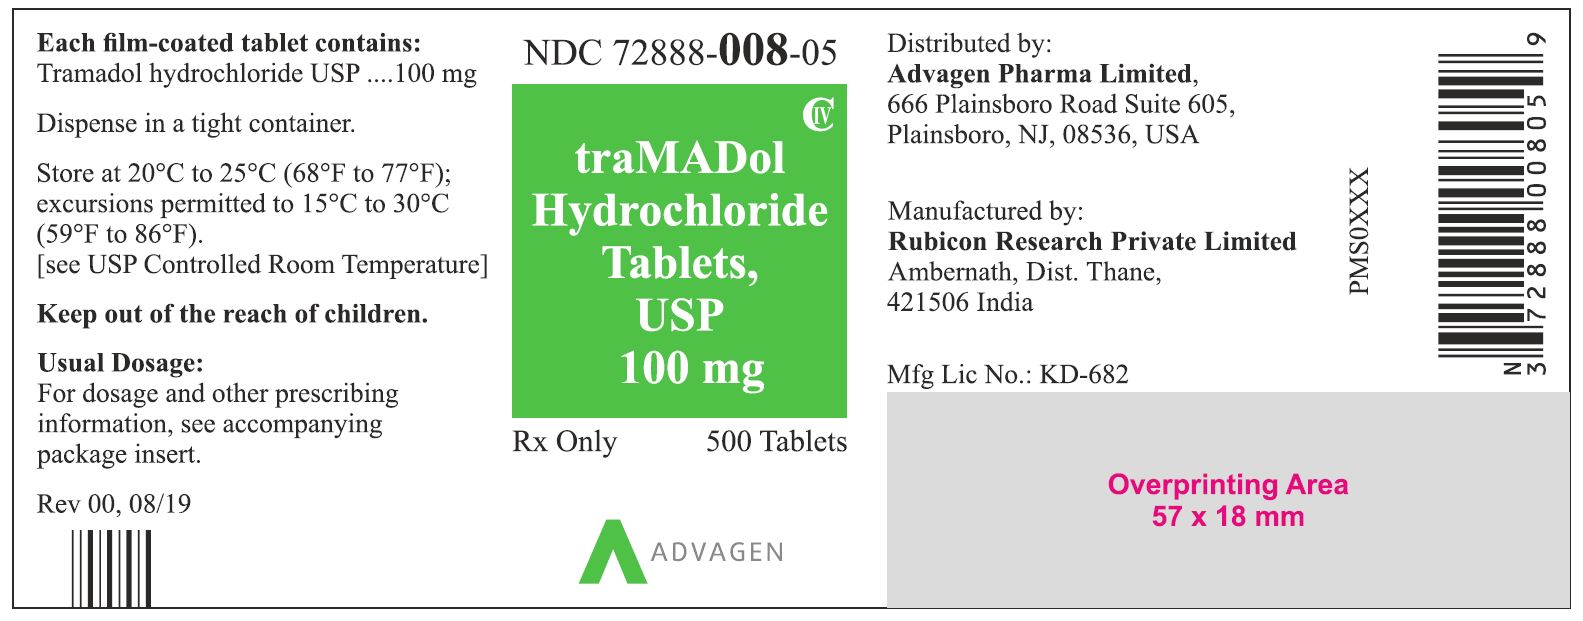 tramadol-hcl-tabs-usp-100-mg-500s